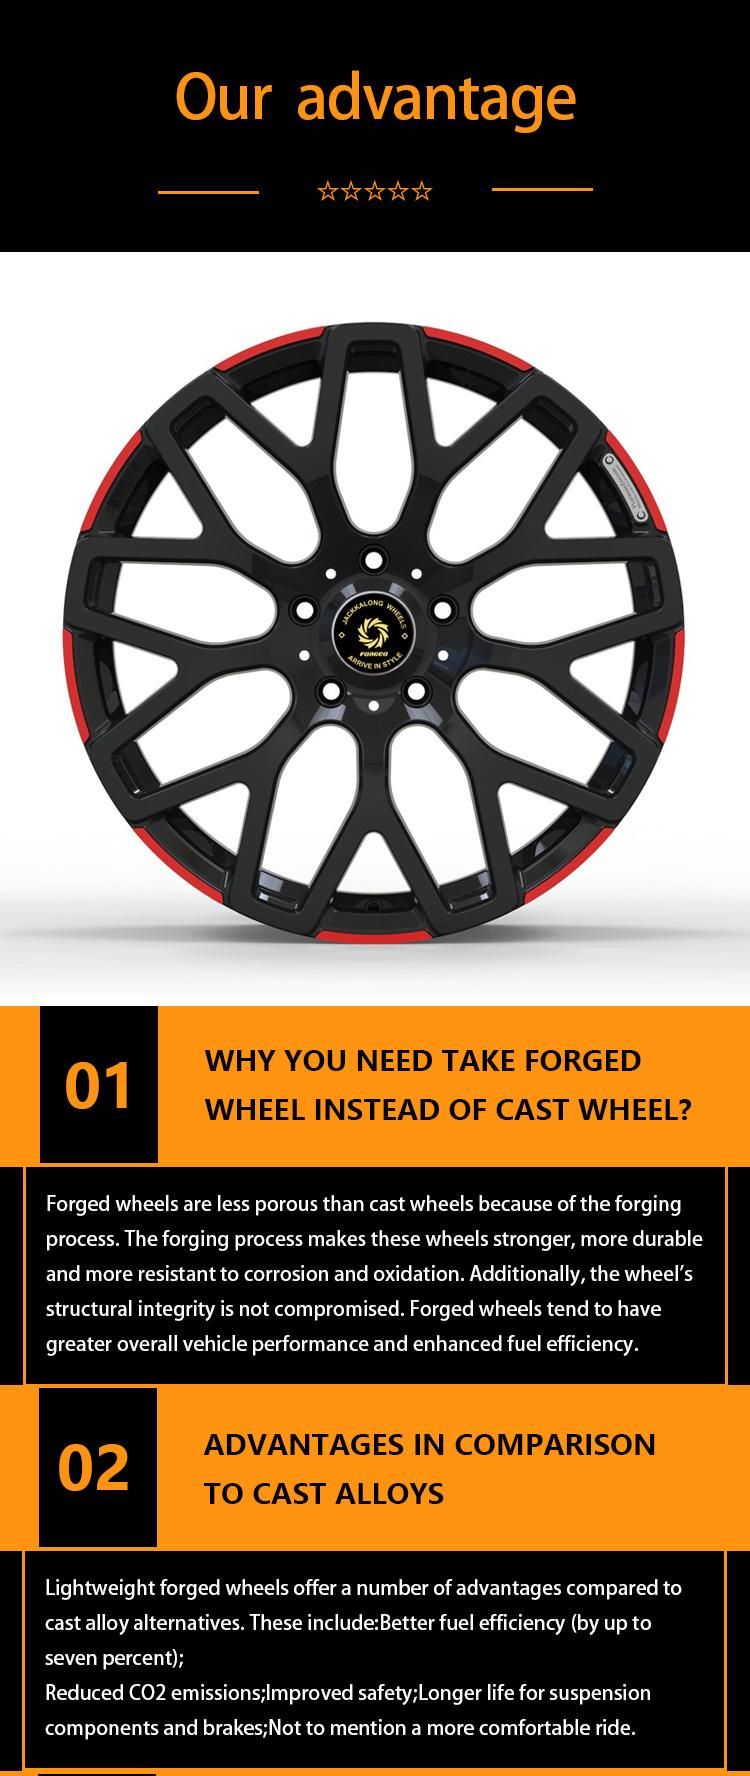 Wheels Forged Monoblock Wheel Rims Deep Dish Rims Sport Rim Aluminum Alloy American Racing Wheels with Matt Black with 5/100 